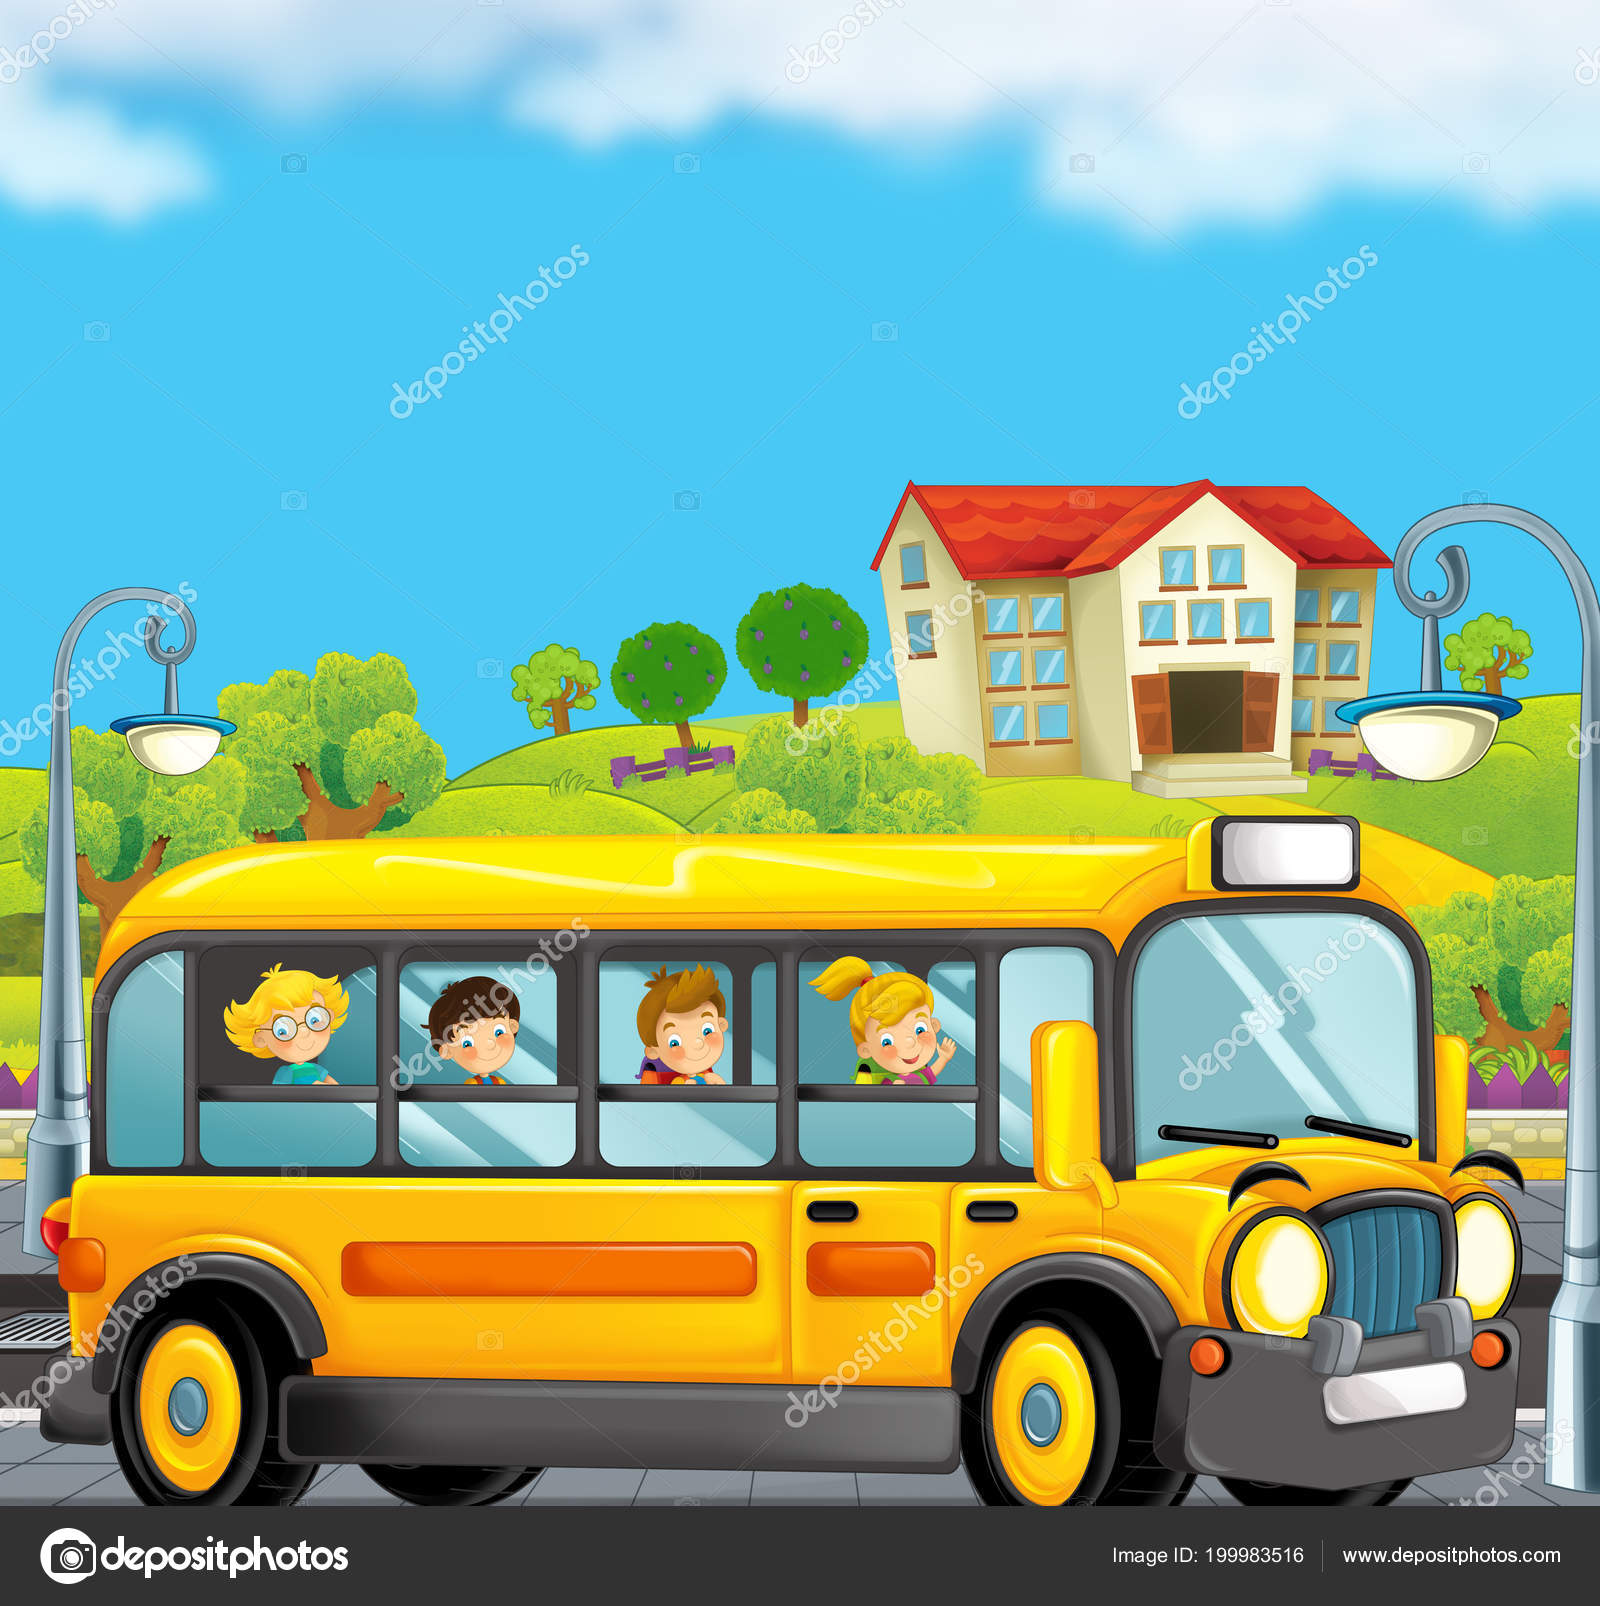 Cartoon Scene Kids School Bus Trip City Illustration Children Stock Photo  by ©illustrator_hft 199983516